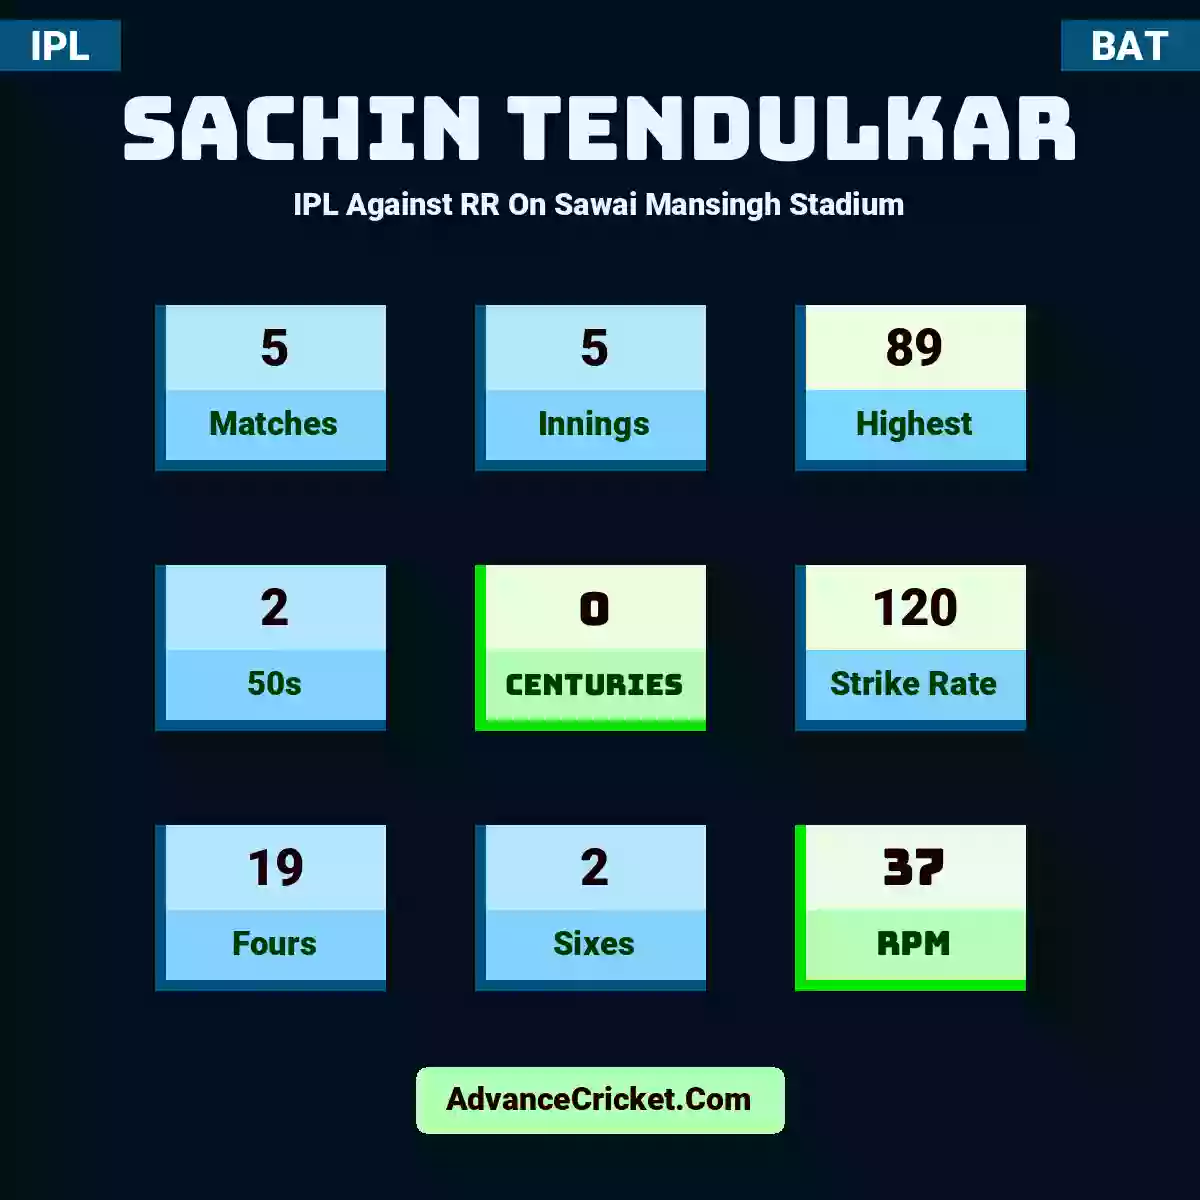 Sachin Tendulkar IPL  Against RR On Sawai Mansingh Stadium, Sachin Tendulkar played 5 matches, scored 89 runs as highest, 2 half-centuries, and 0 centuries, with a strike rate of 120. S.Tendulkar hit 19 fours and 2 sixes, with an RPM of 37.